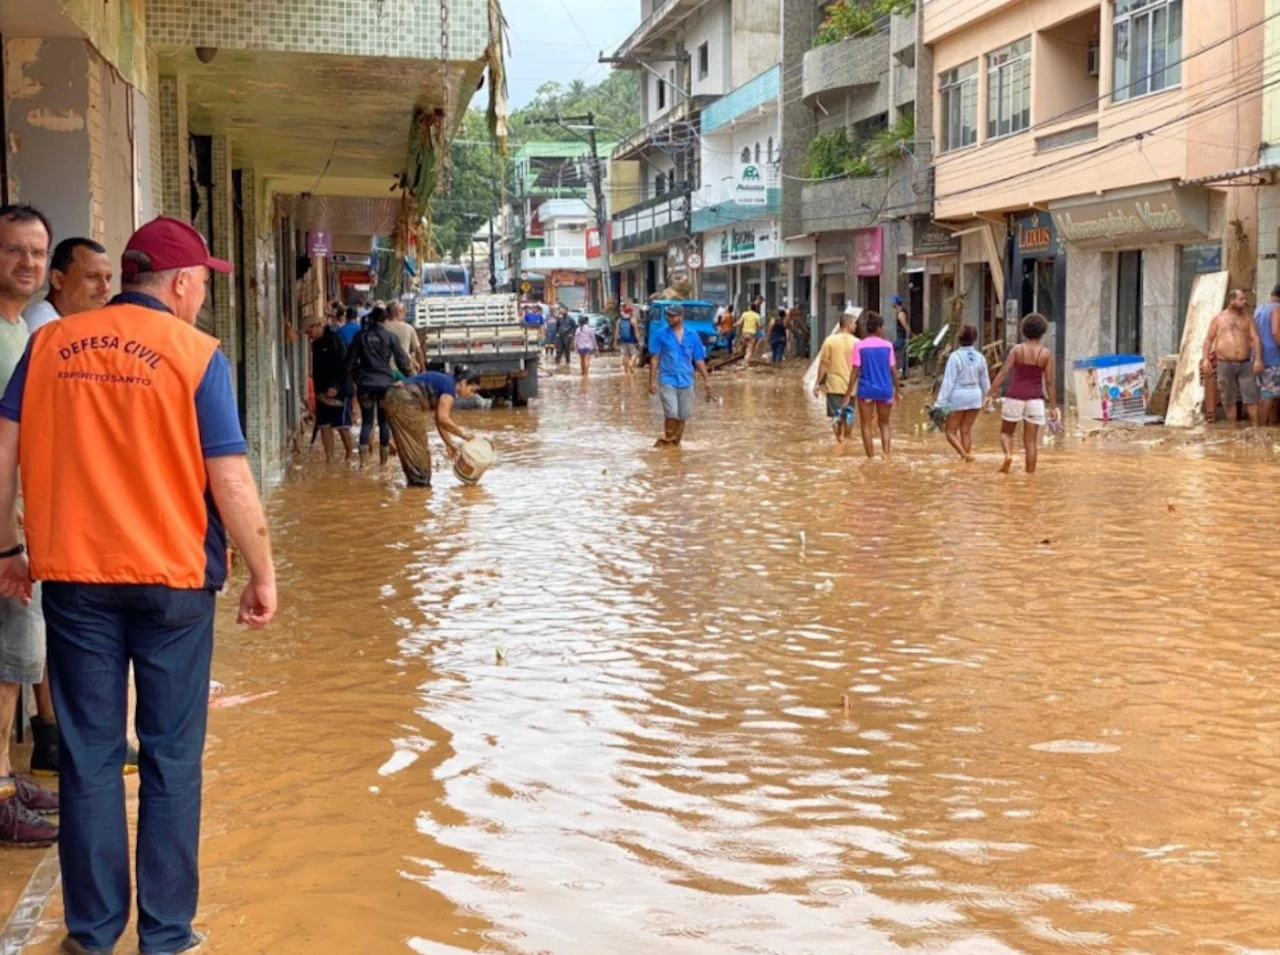 At 2020's start, Brazil saw devastating rainfall that destroyed communities